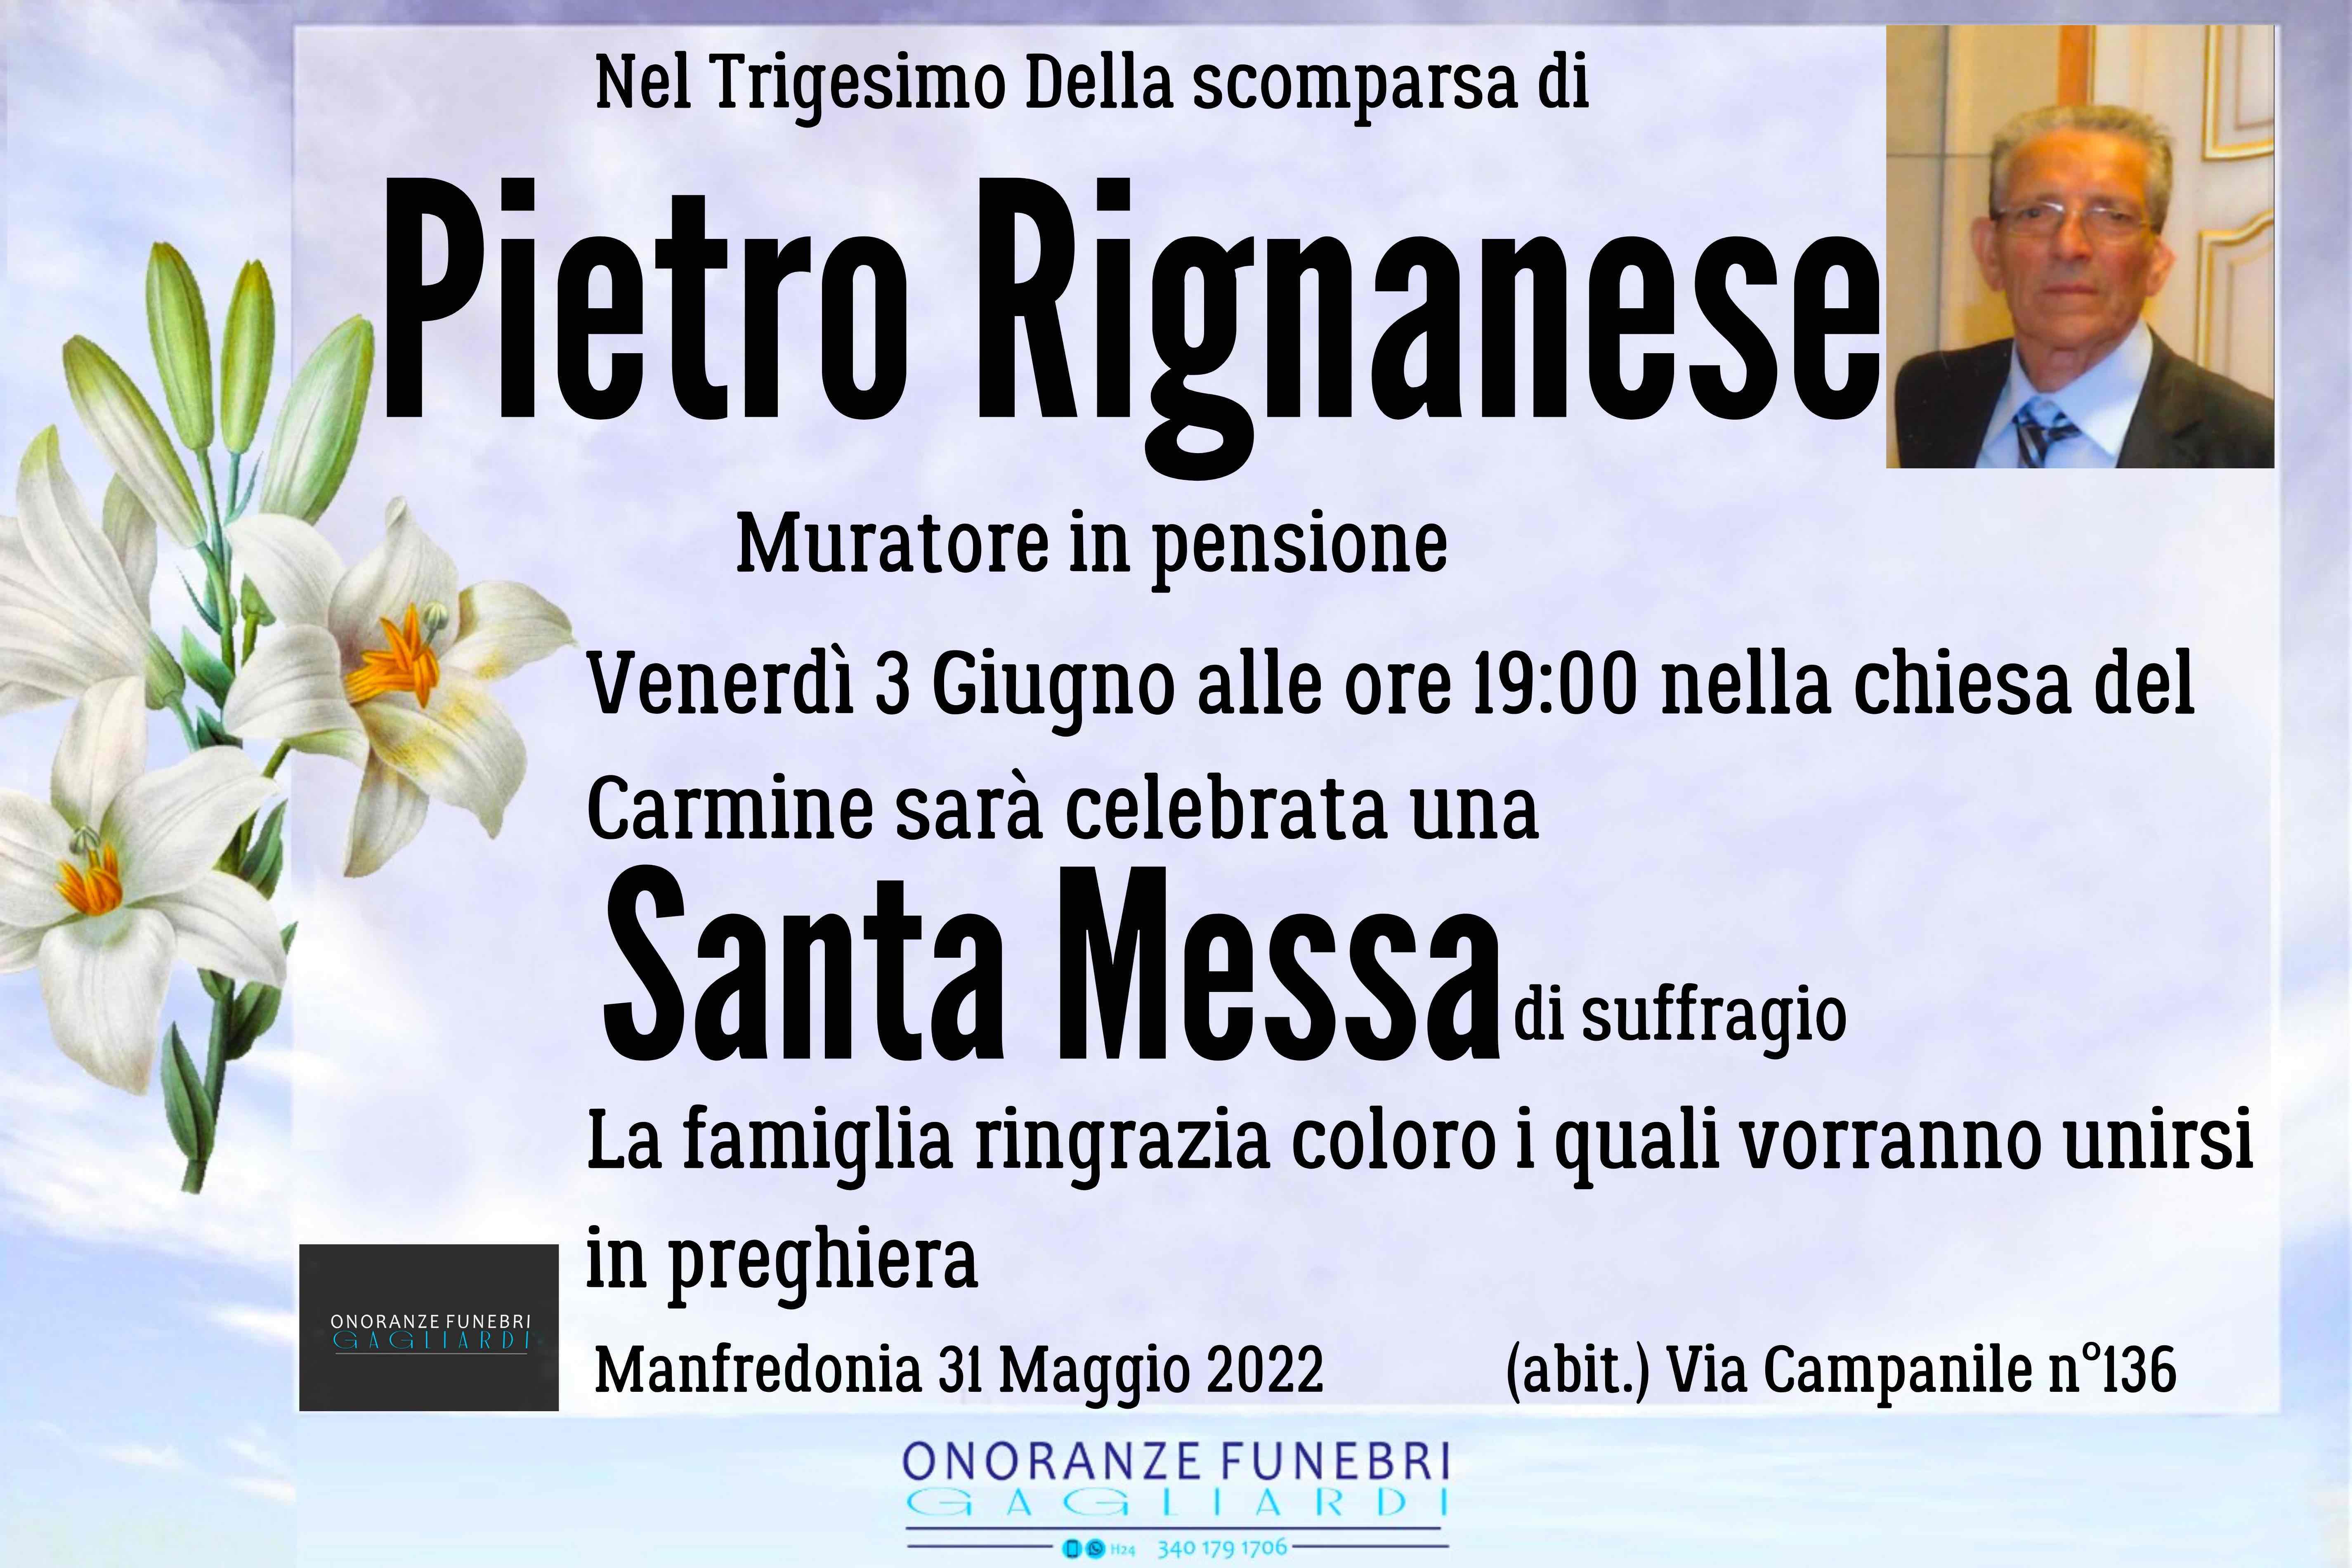 Pietro Rignanese